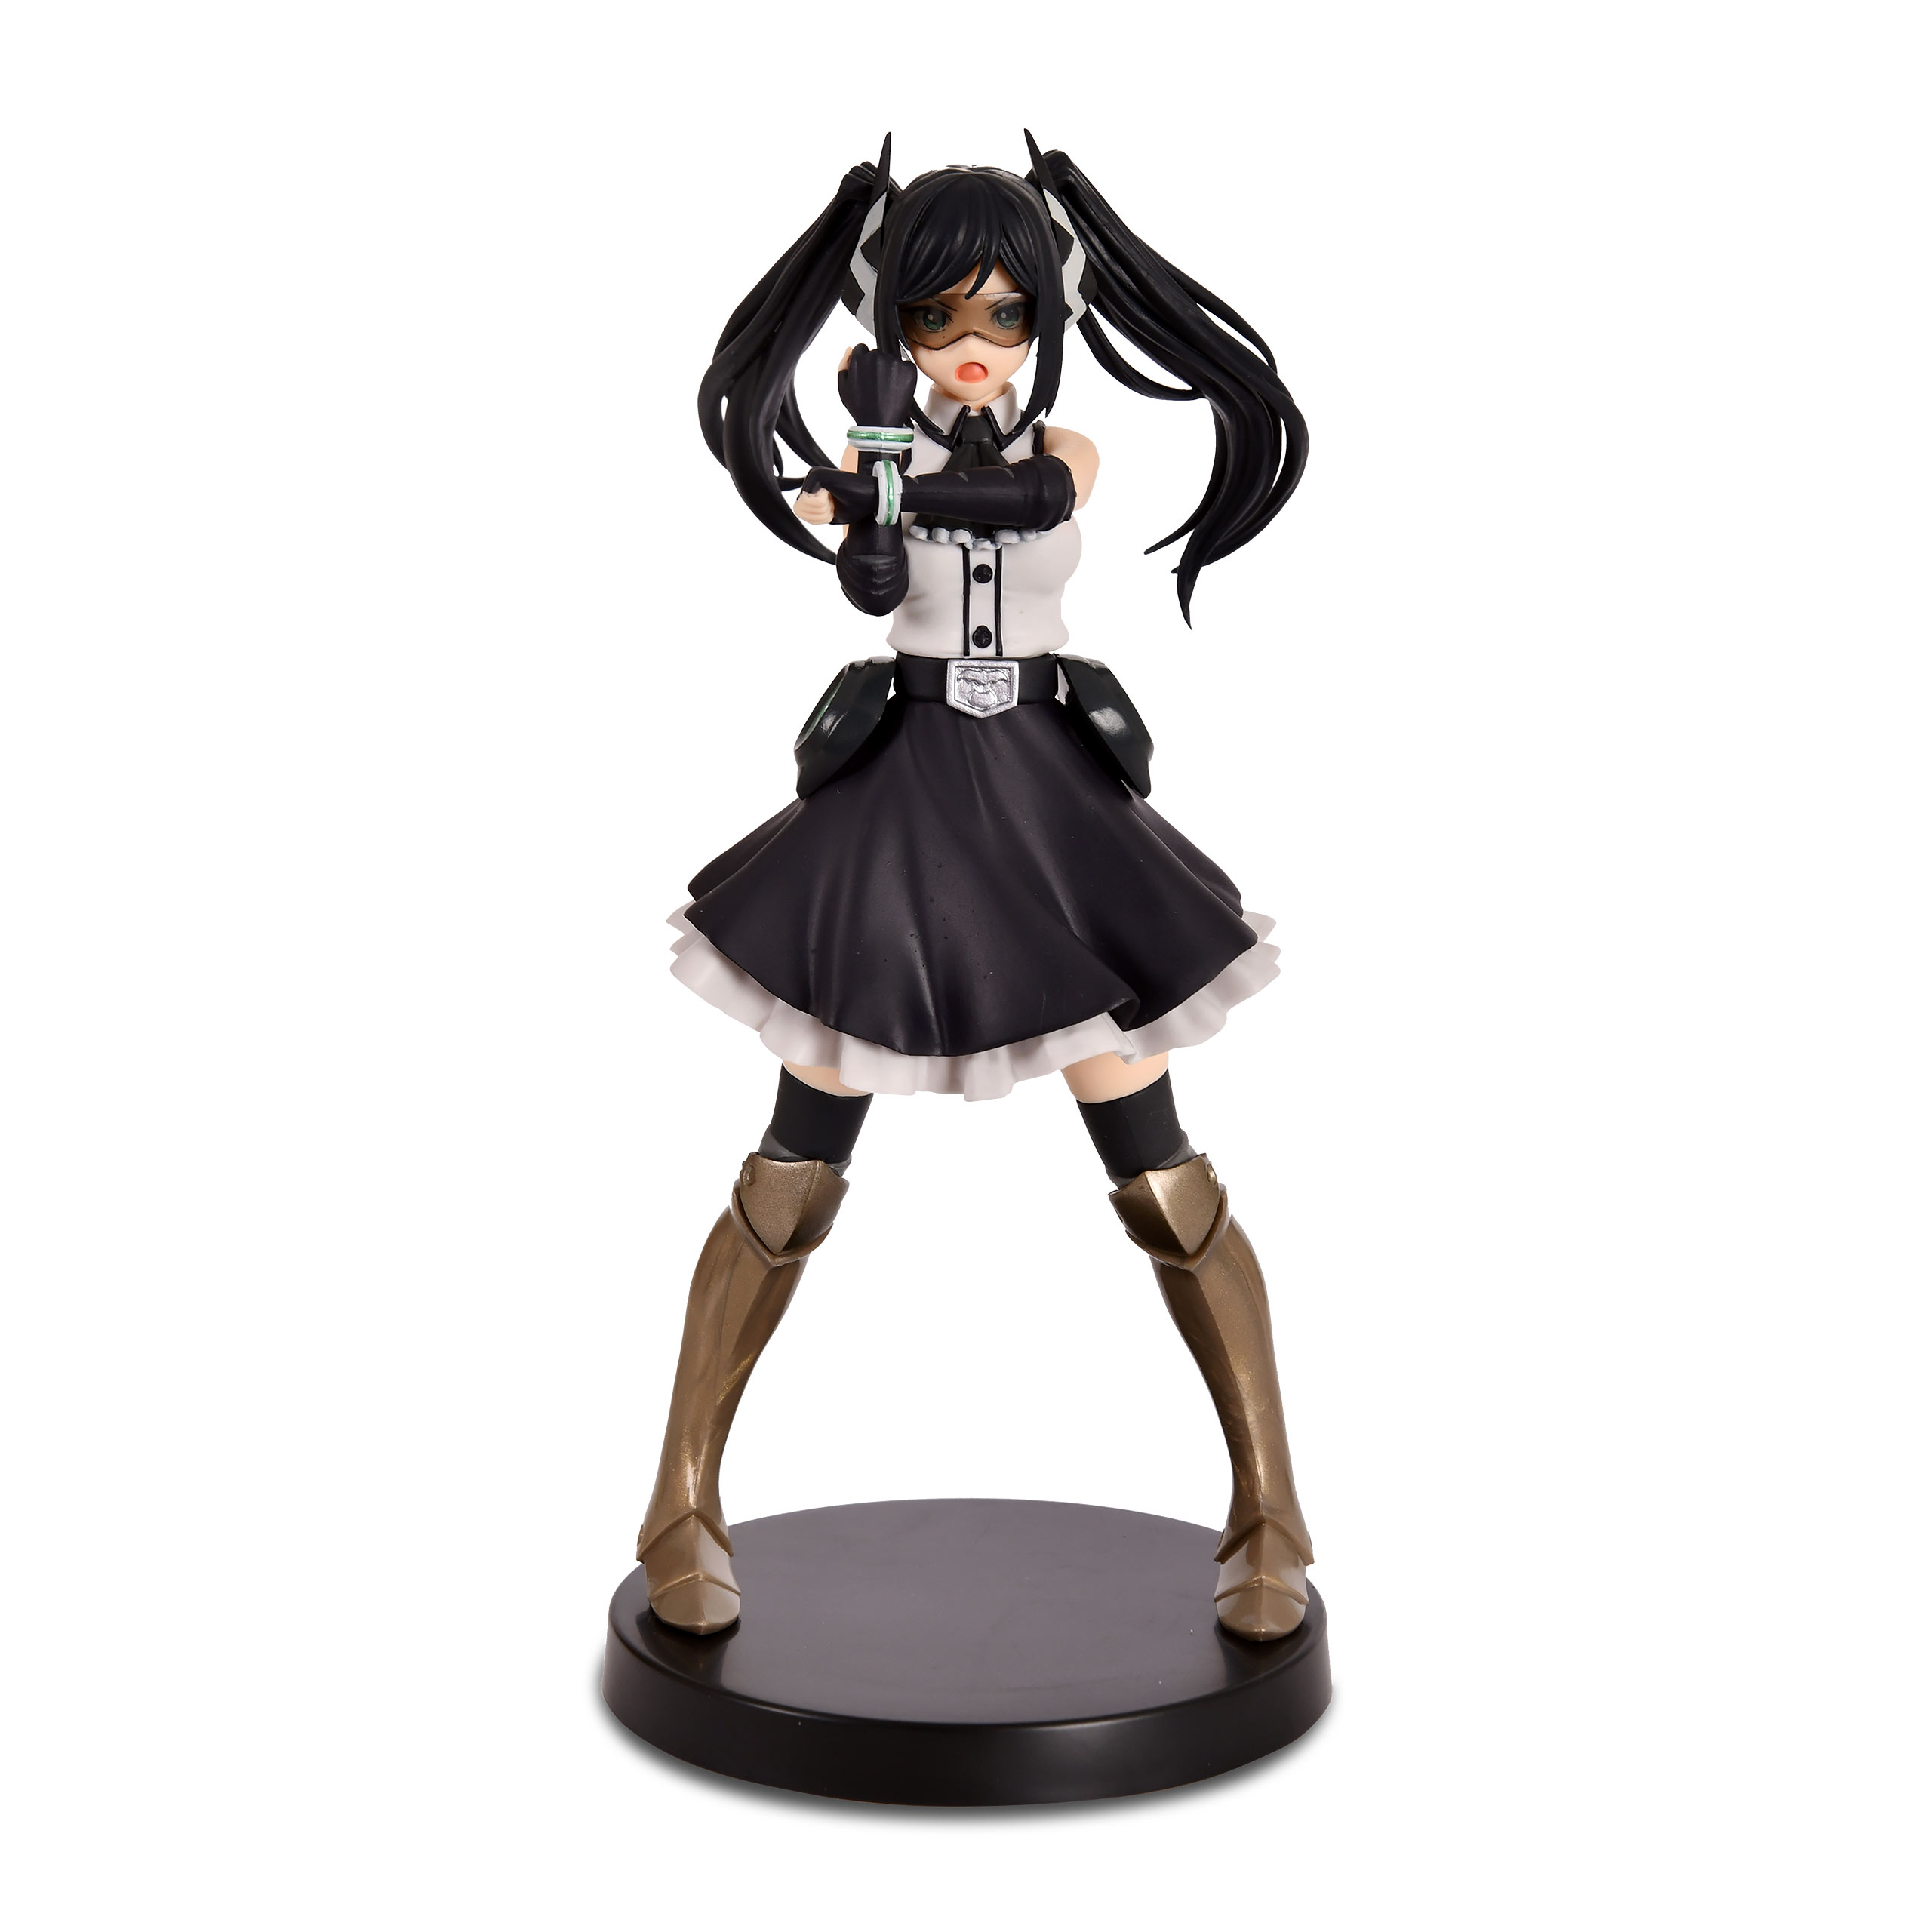 SHY - Figurine Lady Black